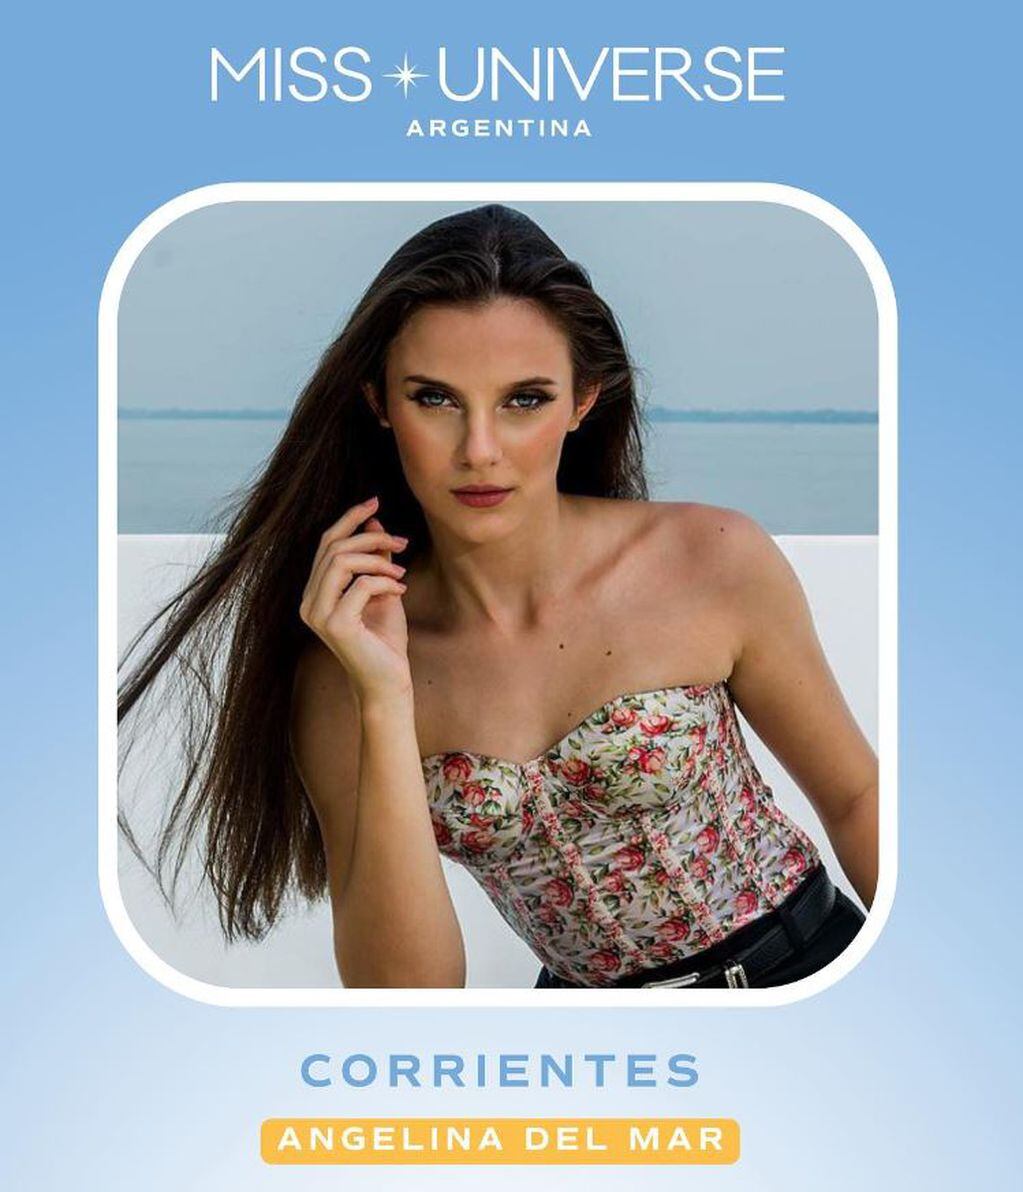 Miss Corrientes, Angelina del Mar